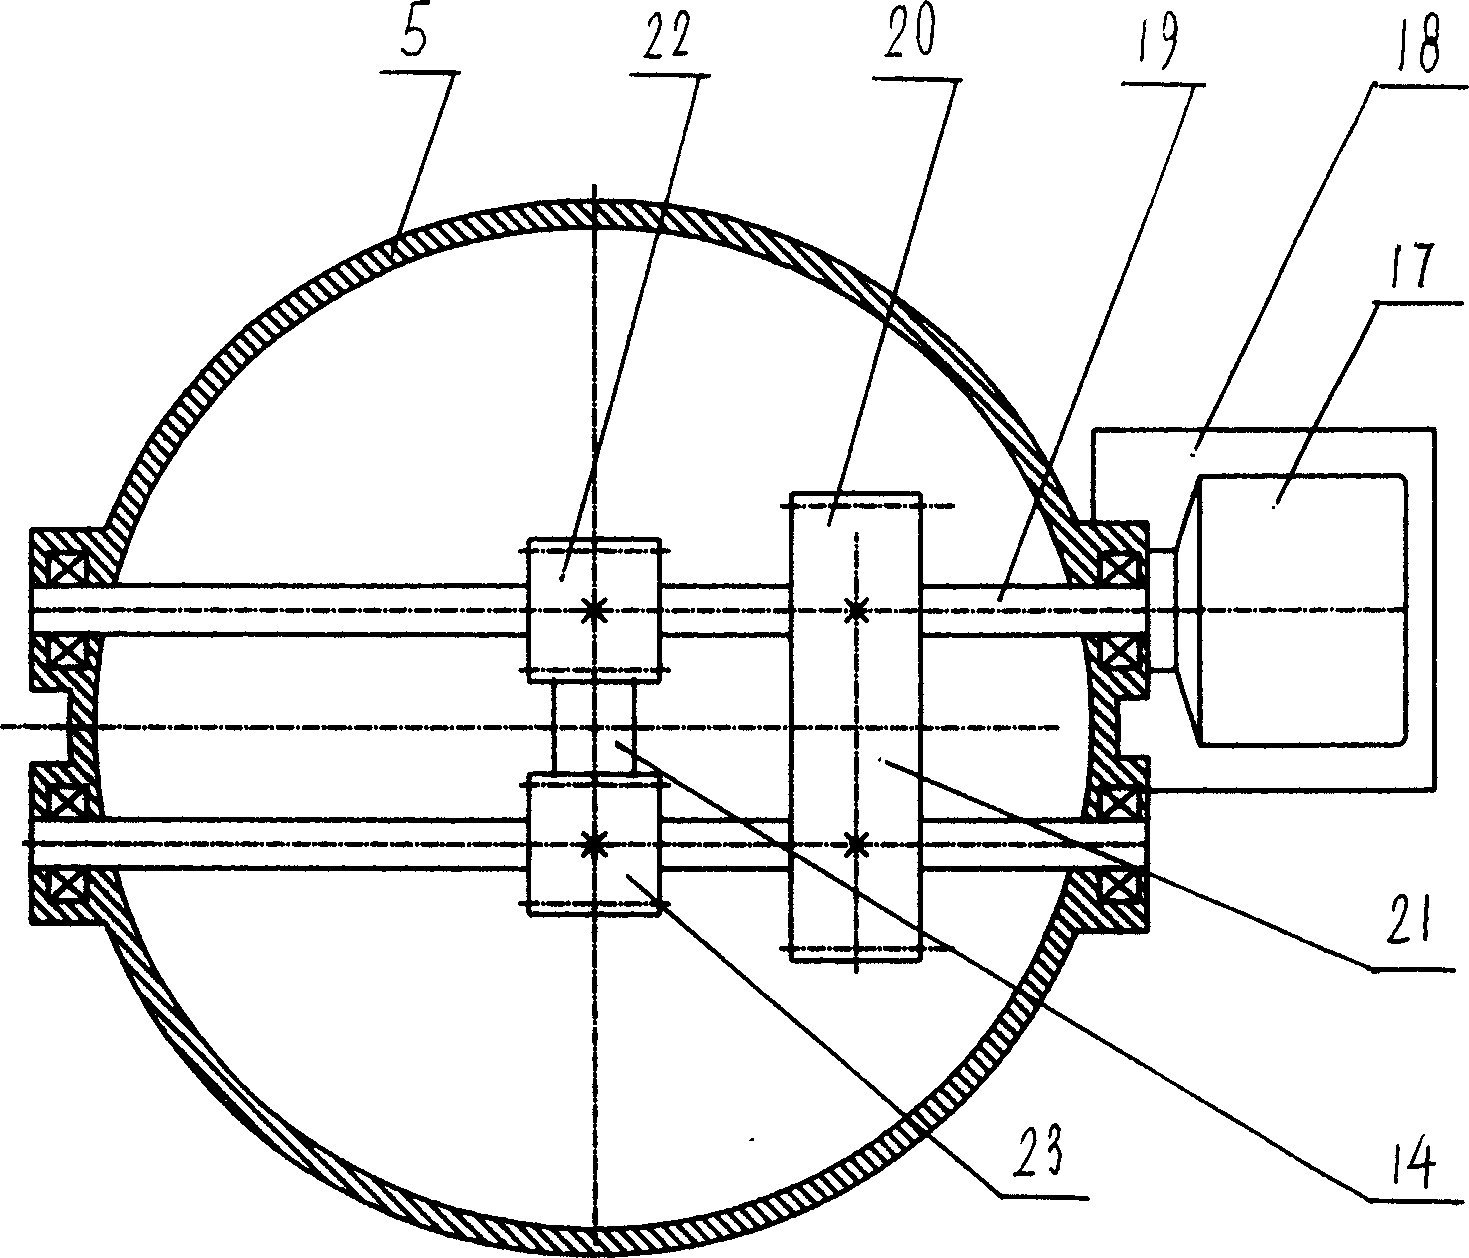 Vertical tube-gear rack type pumping unit